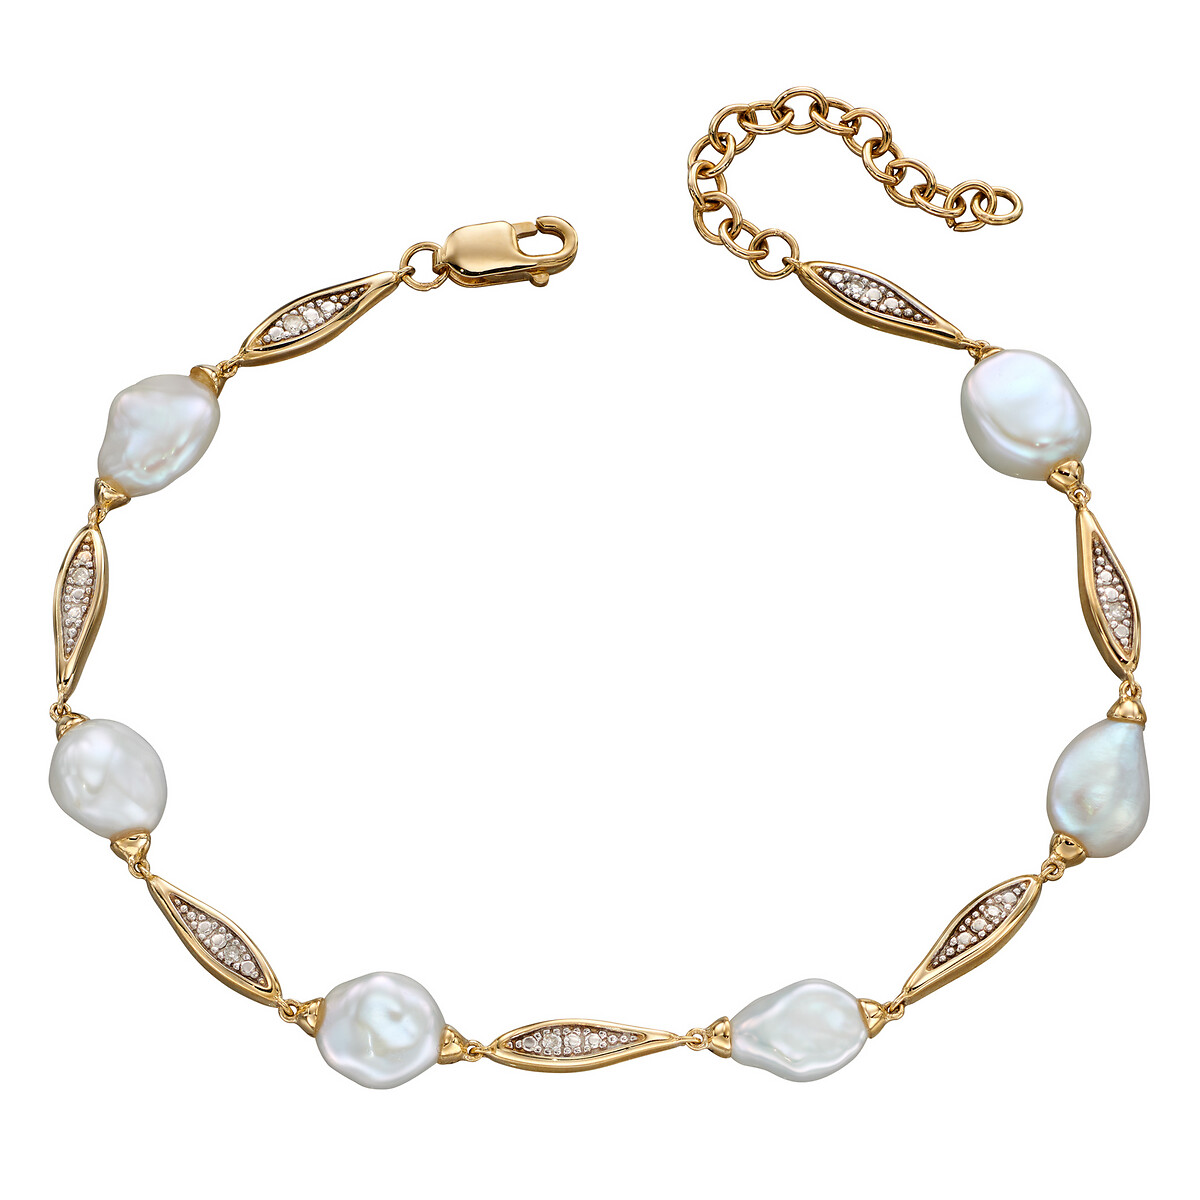 Keshi pearl 9ct gold bracelet , gold-coloured, Elements Gold | La Redoute